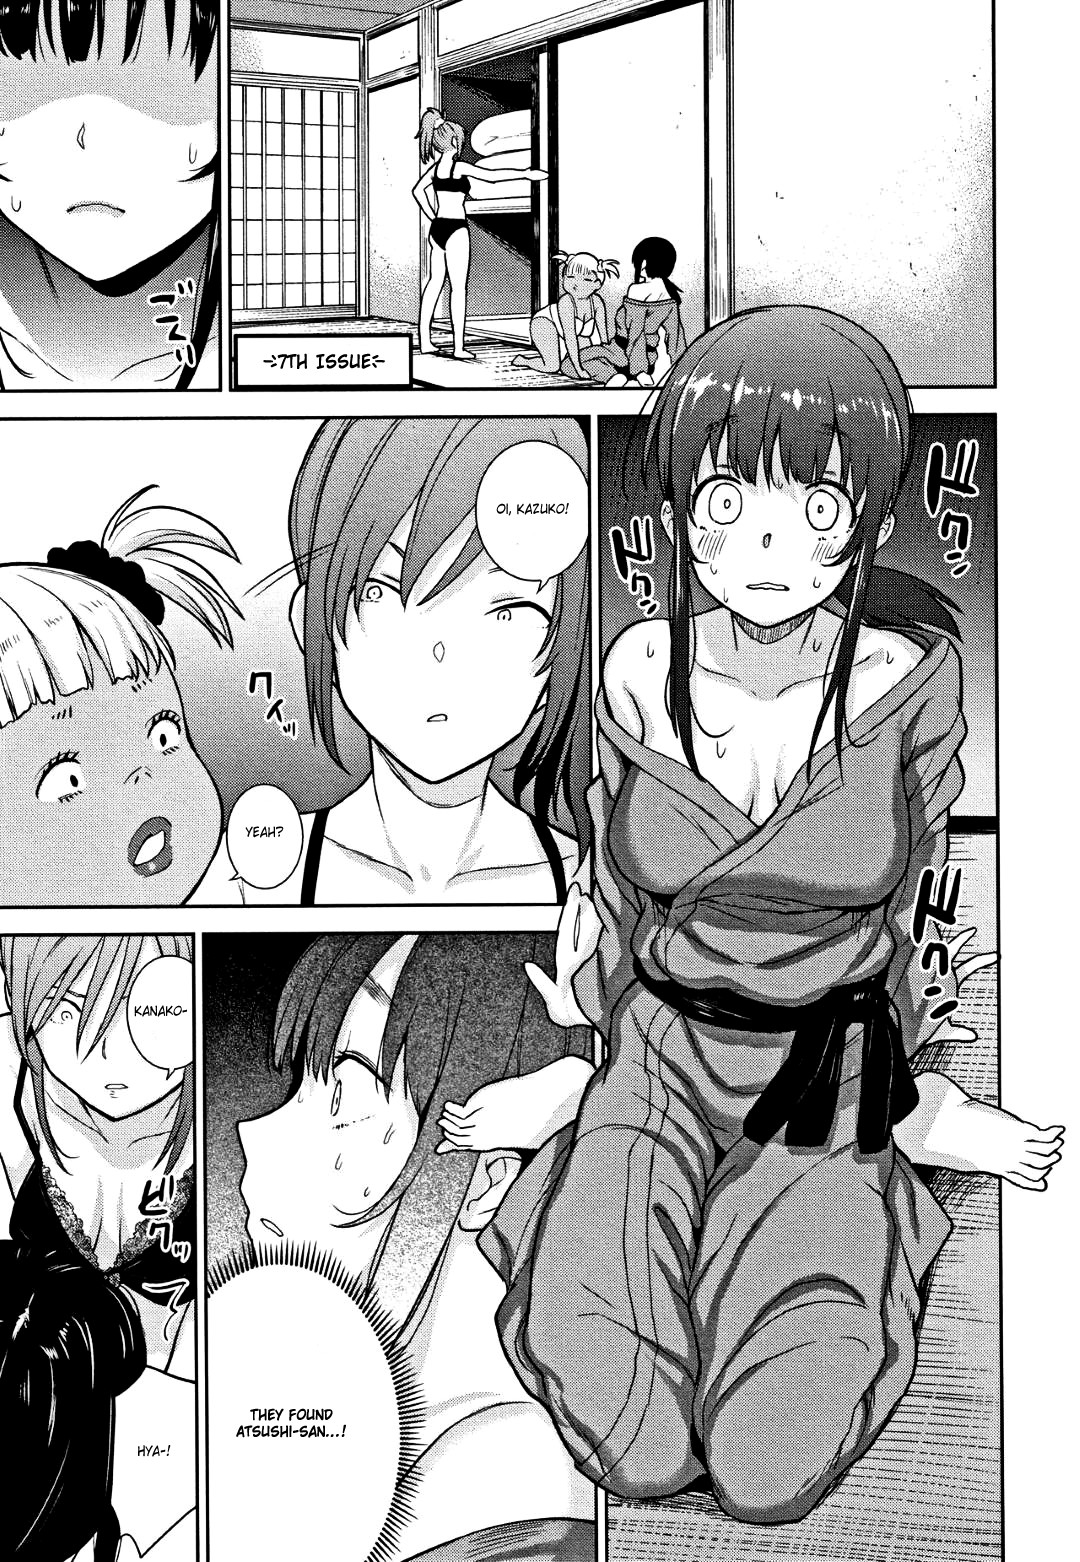 Hentai Manga Comic-Method To Catch a Pretty Girl-Chapter 7-3